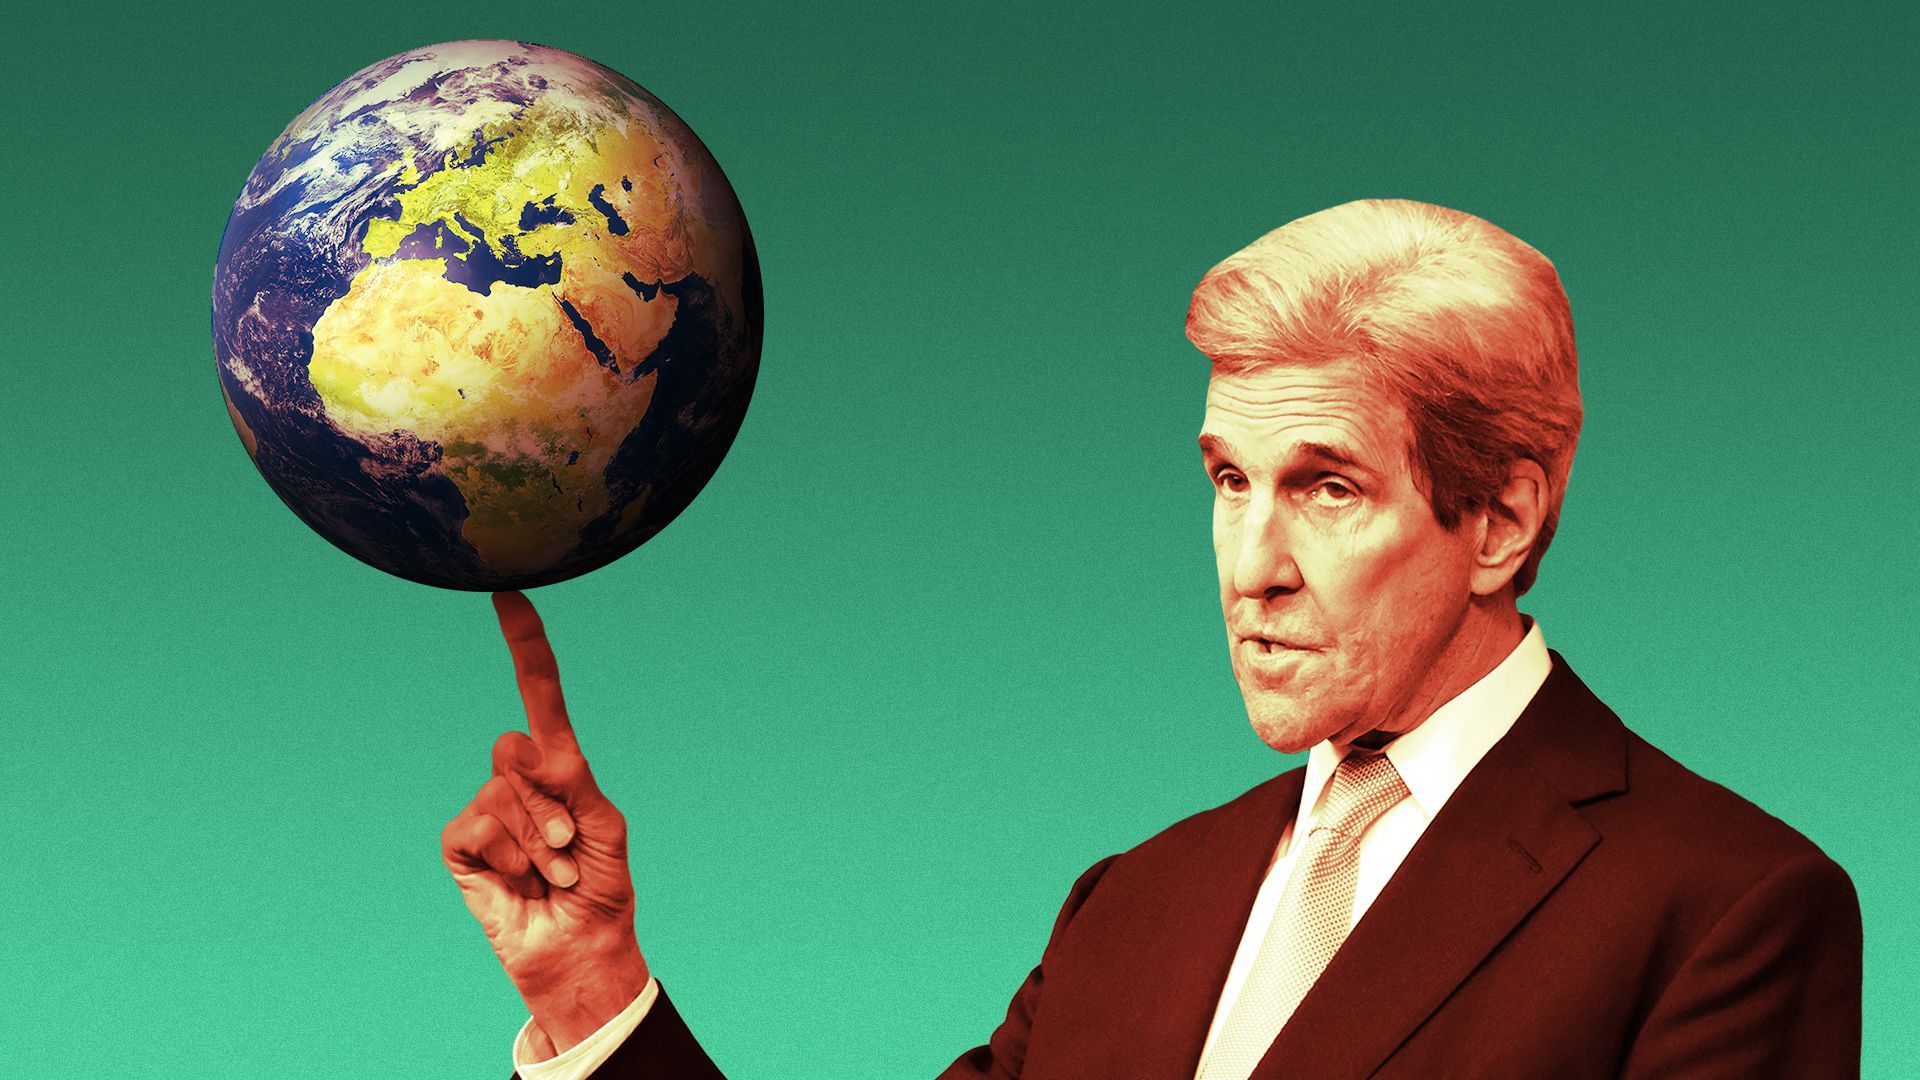  Photo Illustration of John Kerry balancing Earth on his finger.